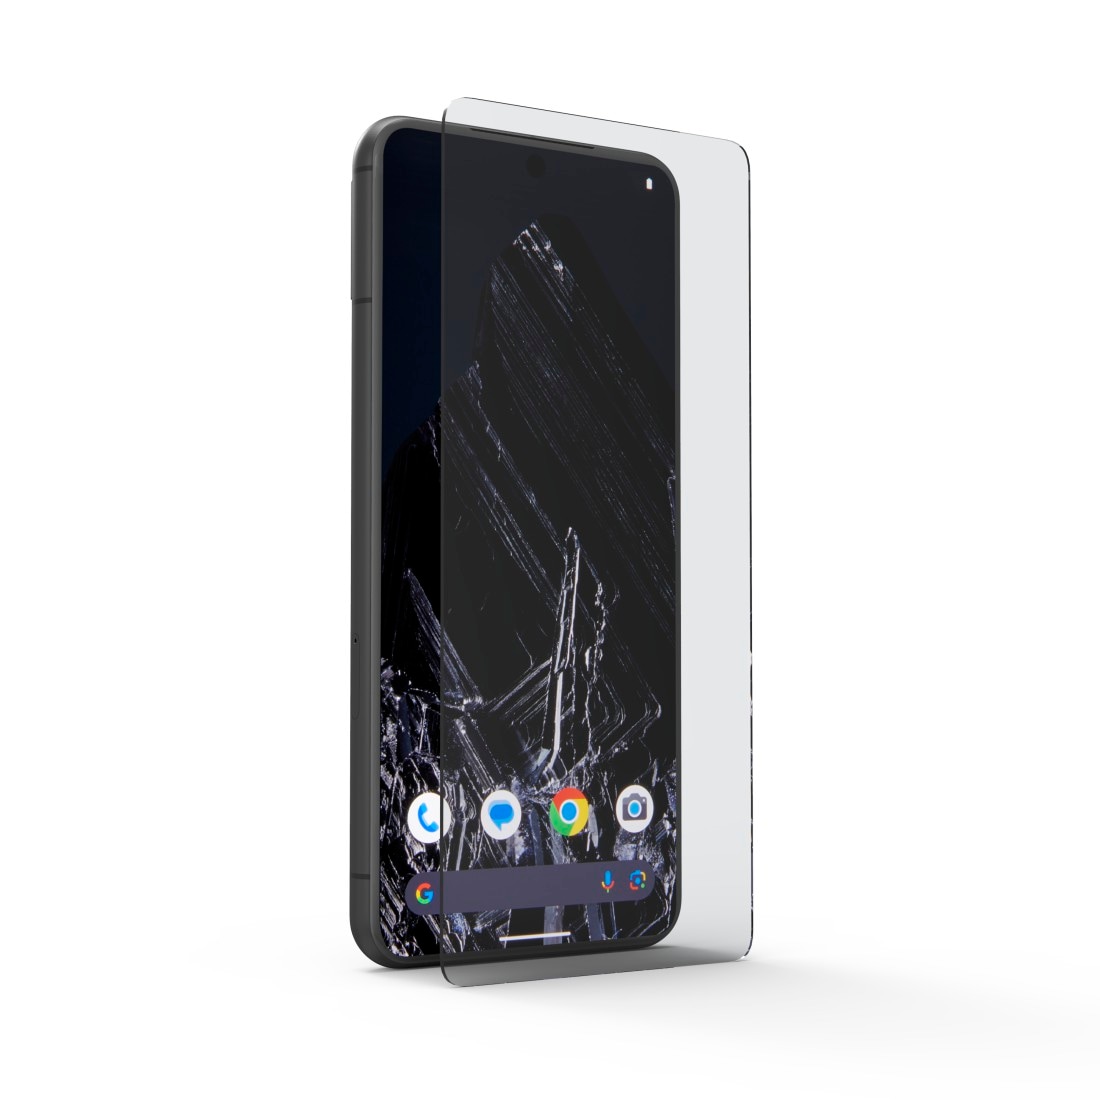 Hama Displayschutzglas »Schutzglas Echtglas Smartphone für Google Pixel 8 Pro, transparent«, für Google Pixel 8 Pro, langlebig, robust, kratzfest, ultradünn